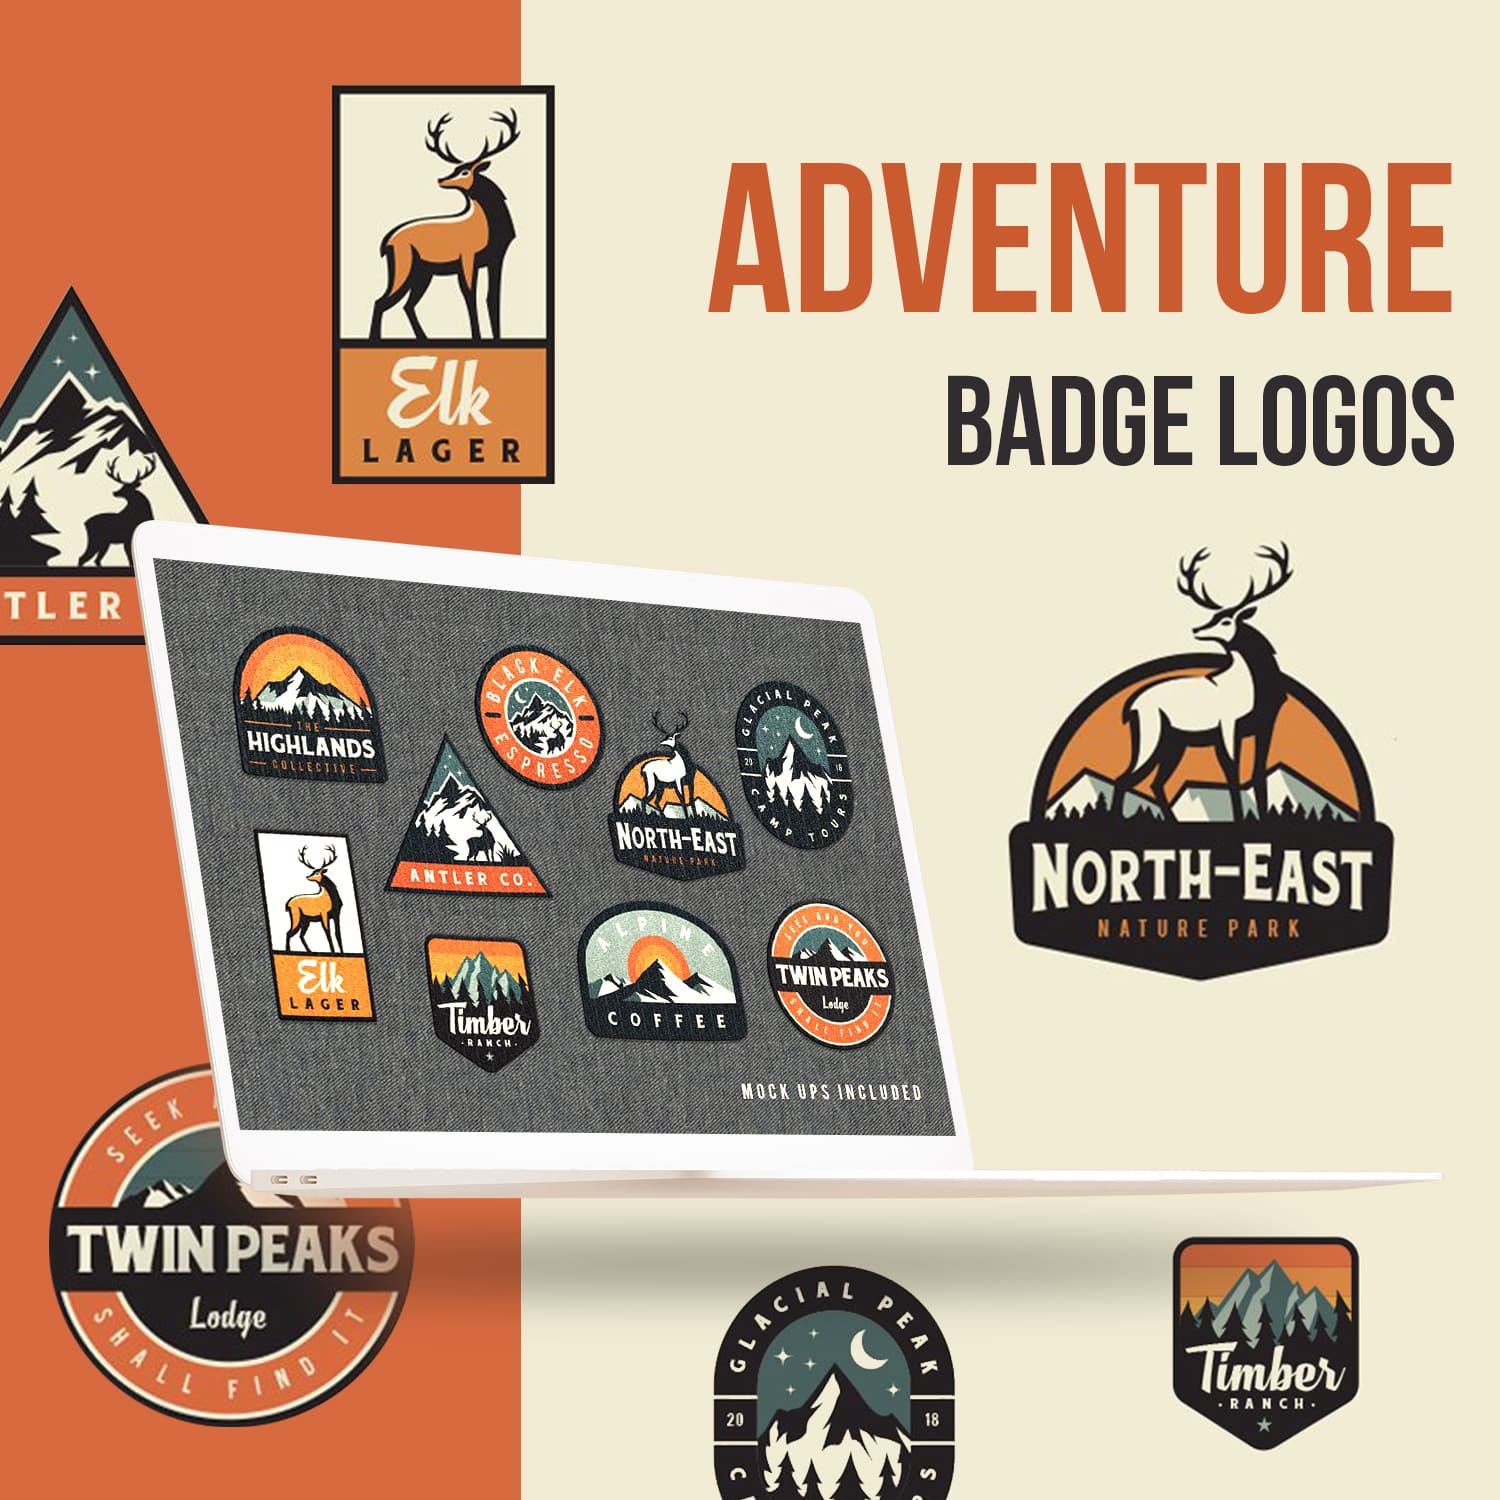 adventure badge logos cover